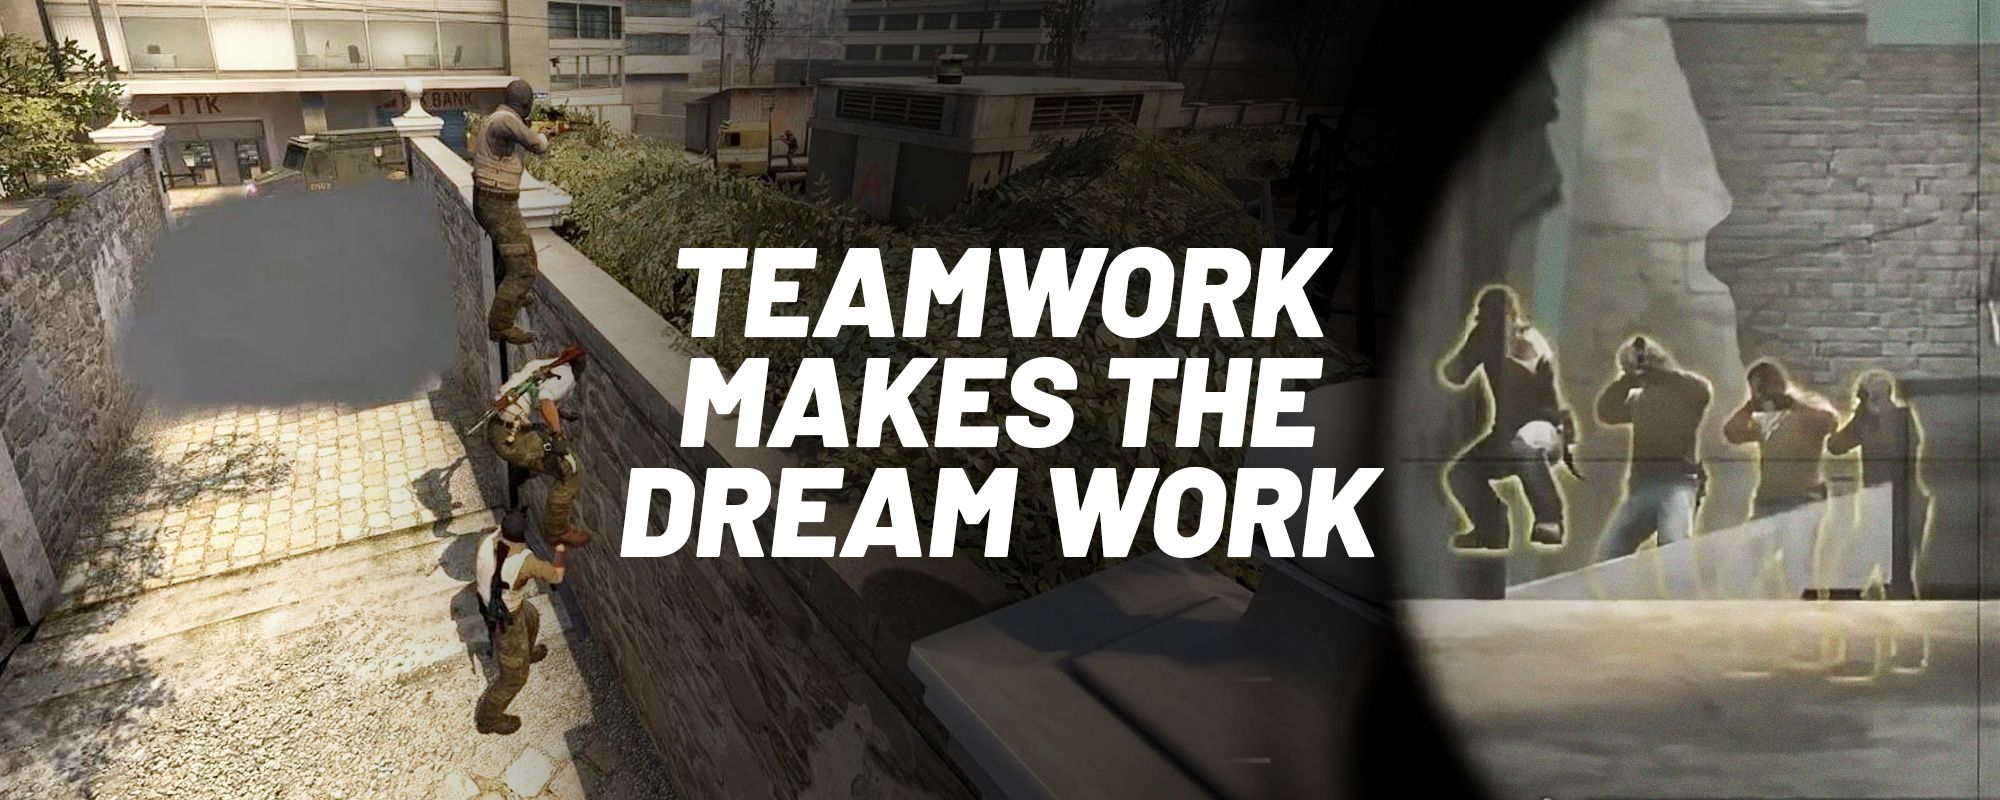 Teamwork Makes the Dream Work!